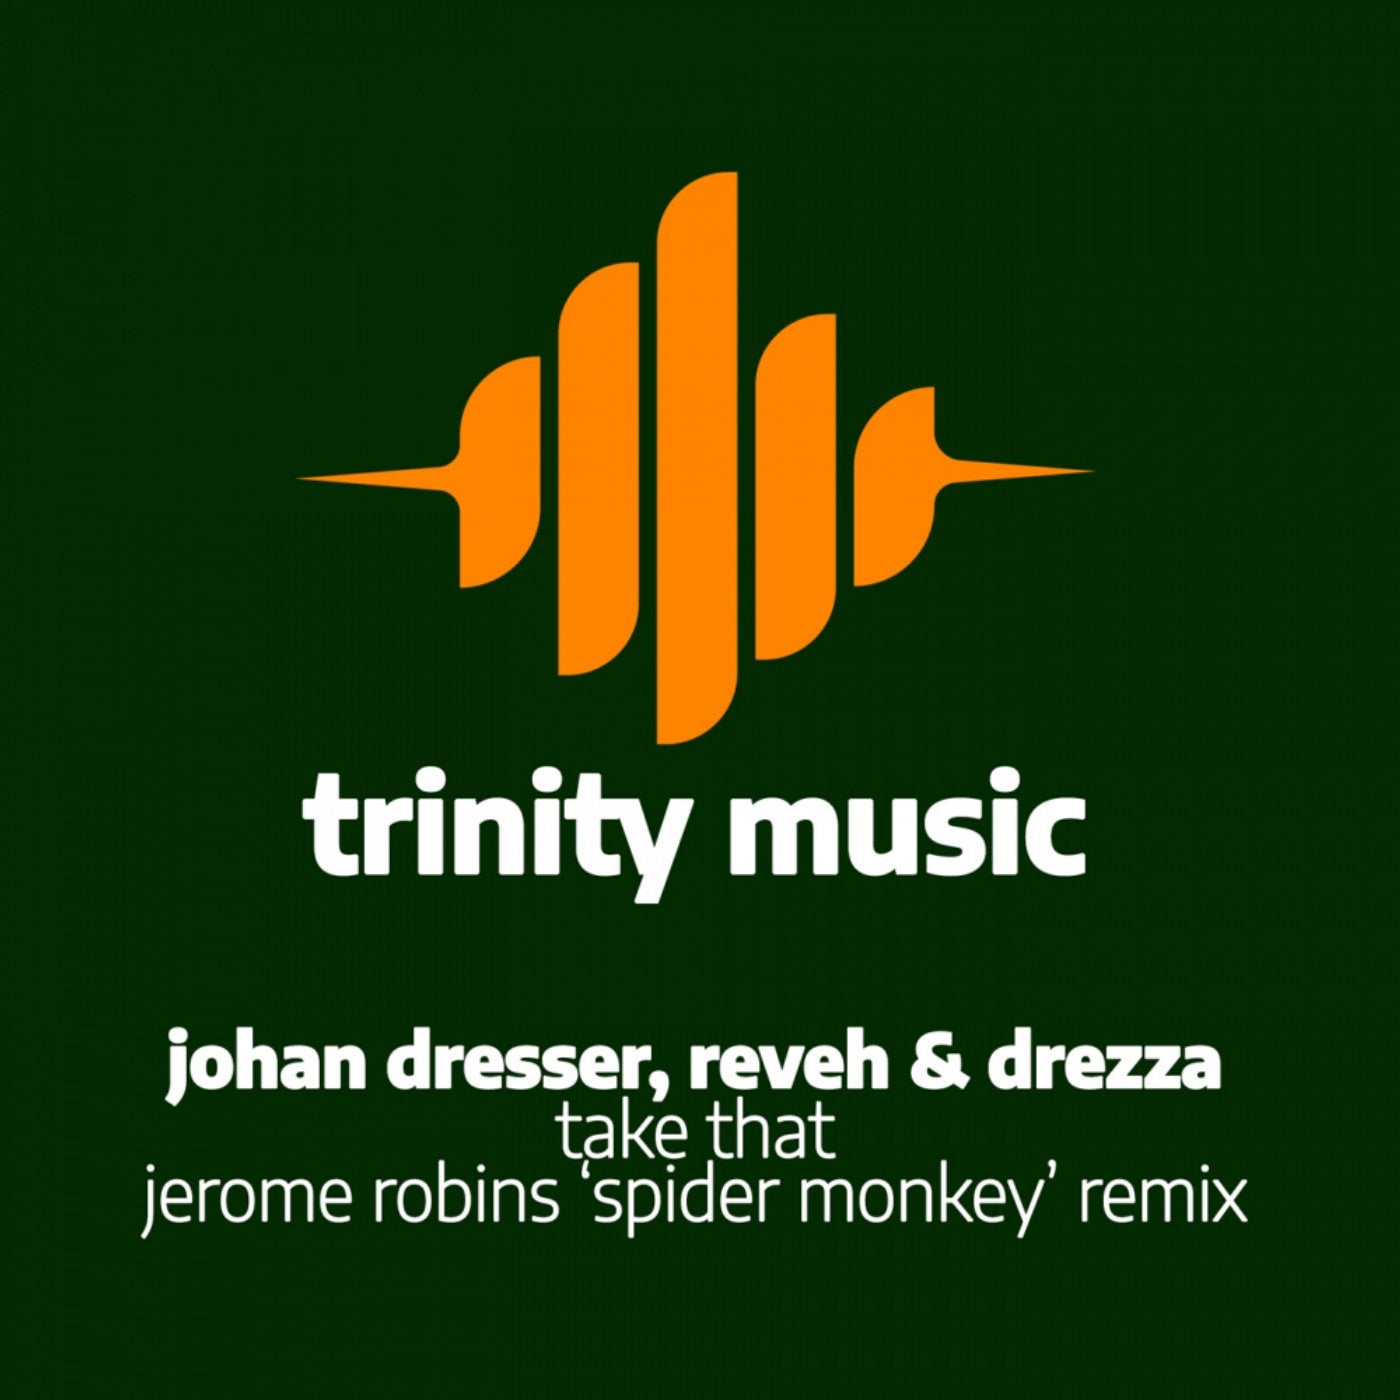 Take That (Jerome Robins Spider Monkey Remix)